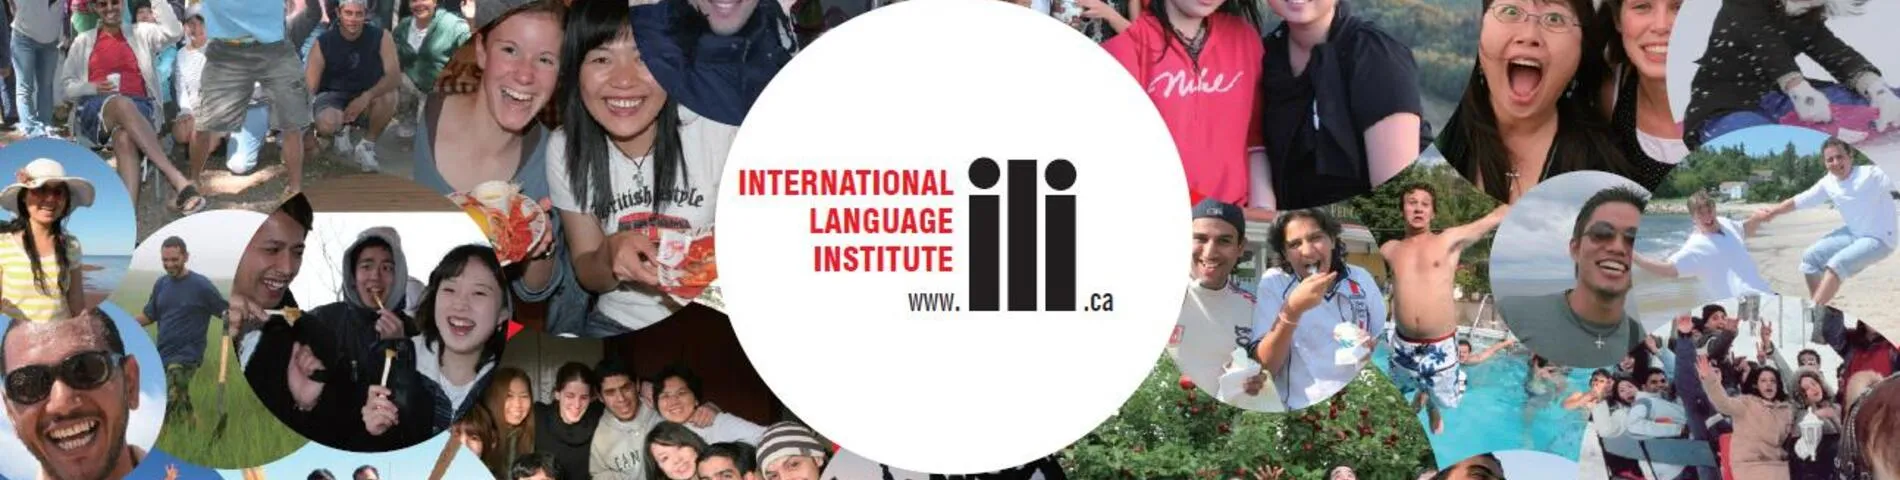 ILI - International Language Institute bild 1